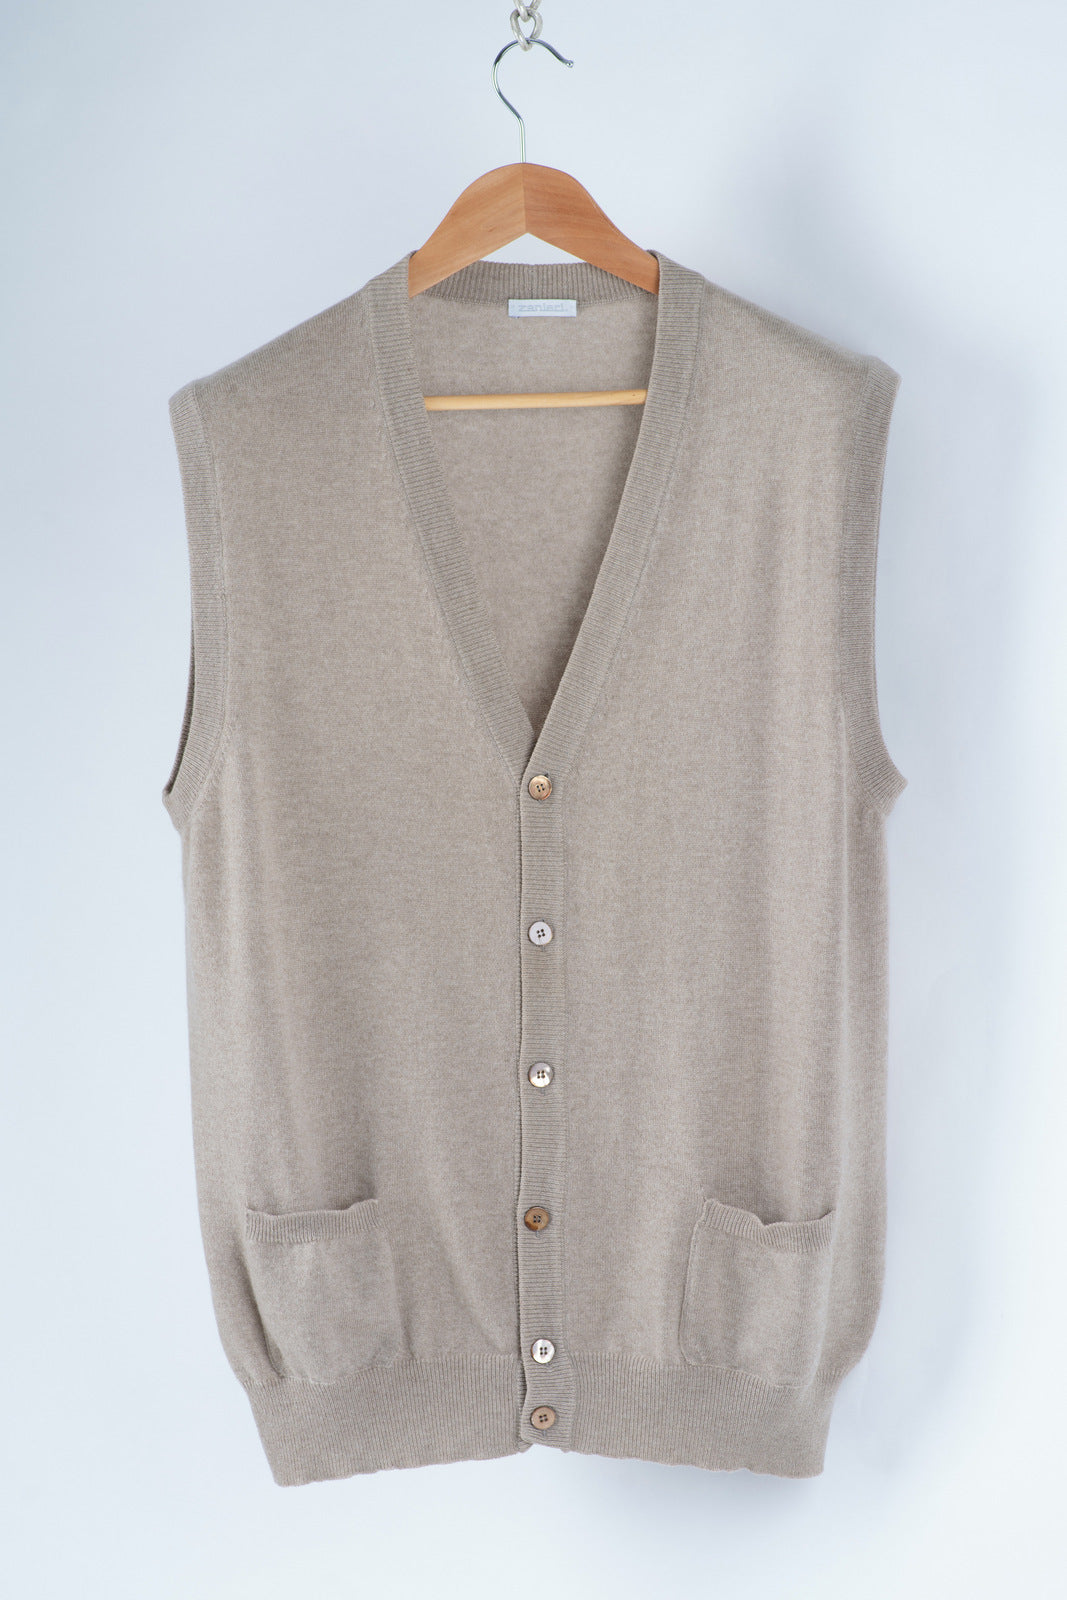 Zanieri Light Brown Cashmere Vest, Size XL, EU 54